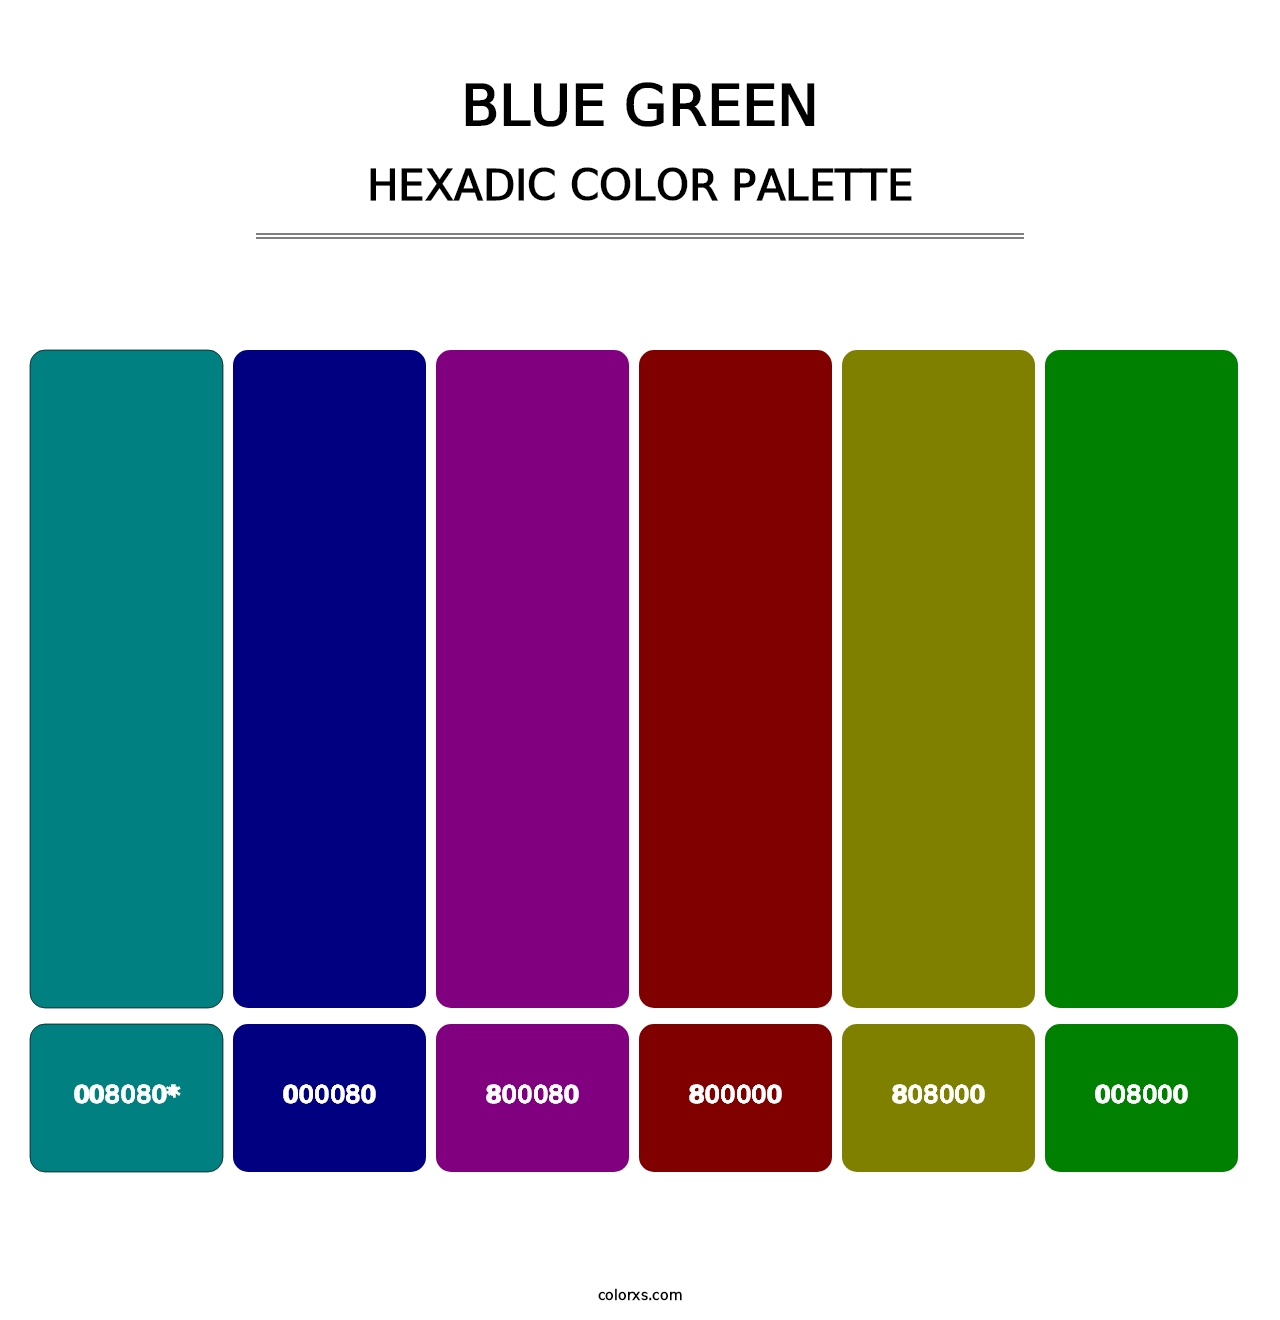 Blue Green - Hexadic Color Palette